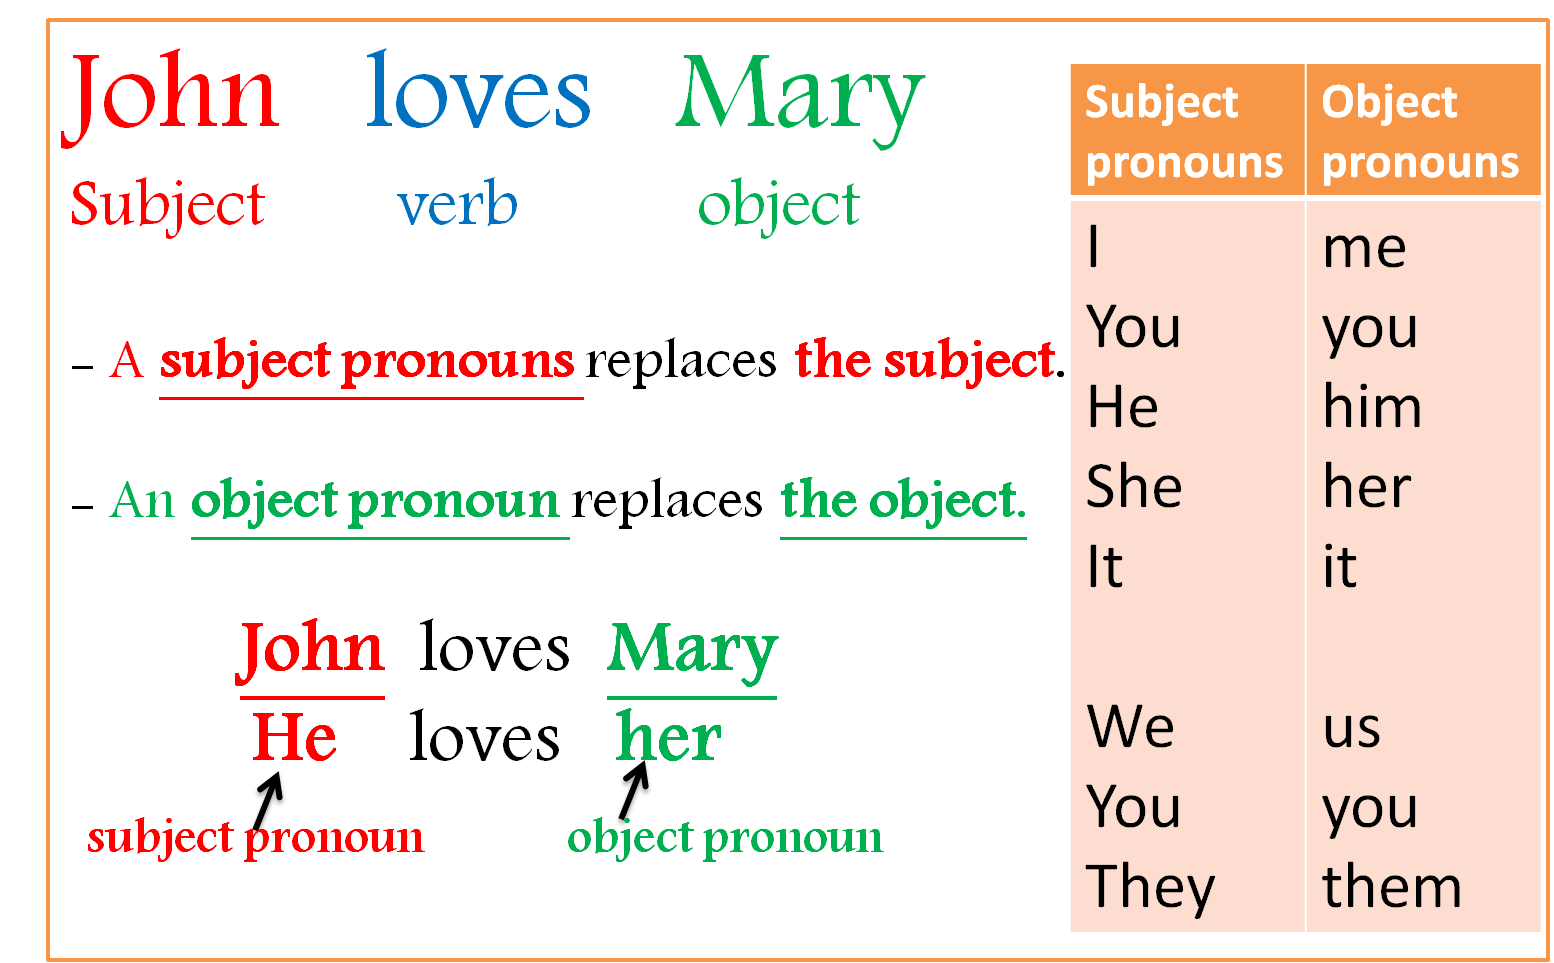 Personal object. Personal object pronouns в английском. Объектные местоимения в английском. Местоимения объектного падежа в английском. Объектные местоимения в английском языке таблица.